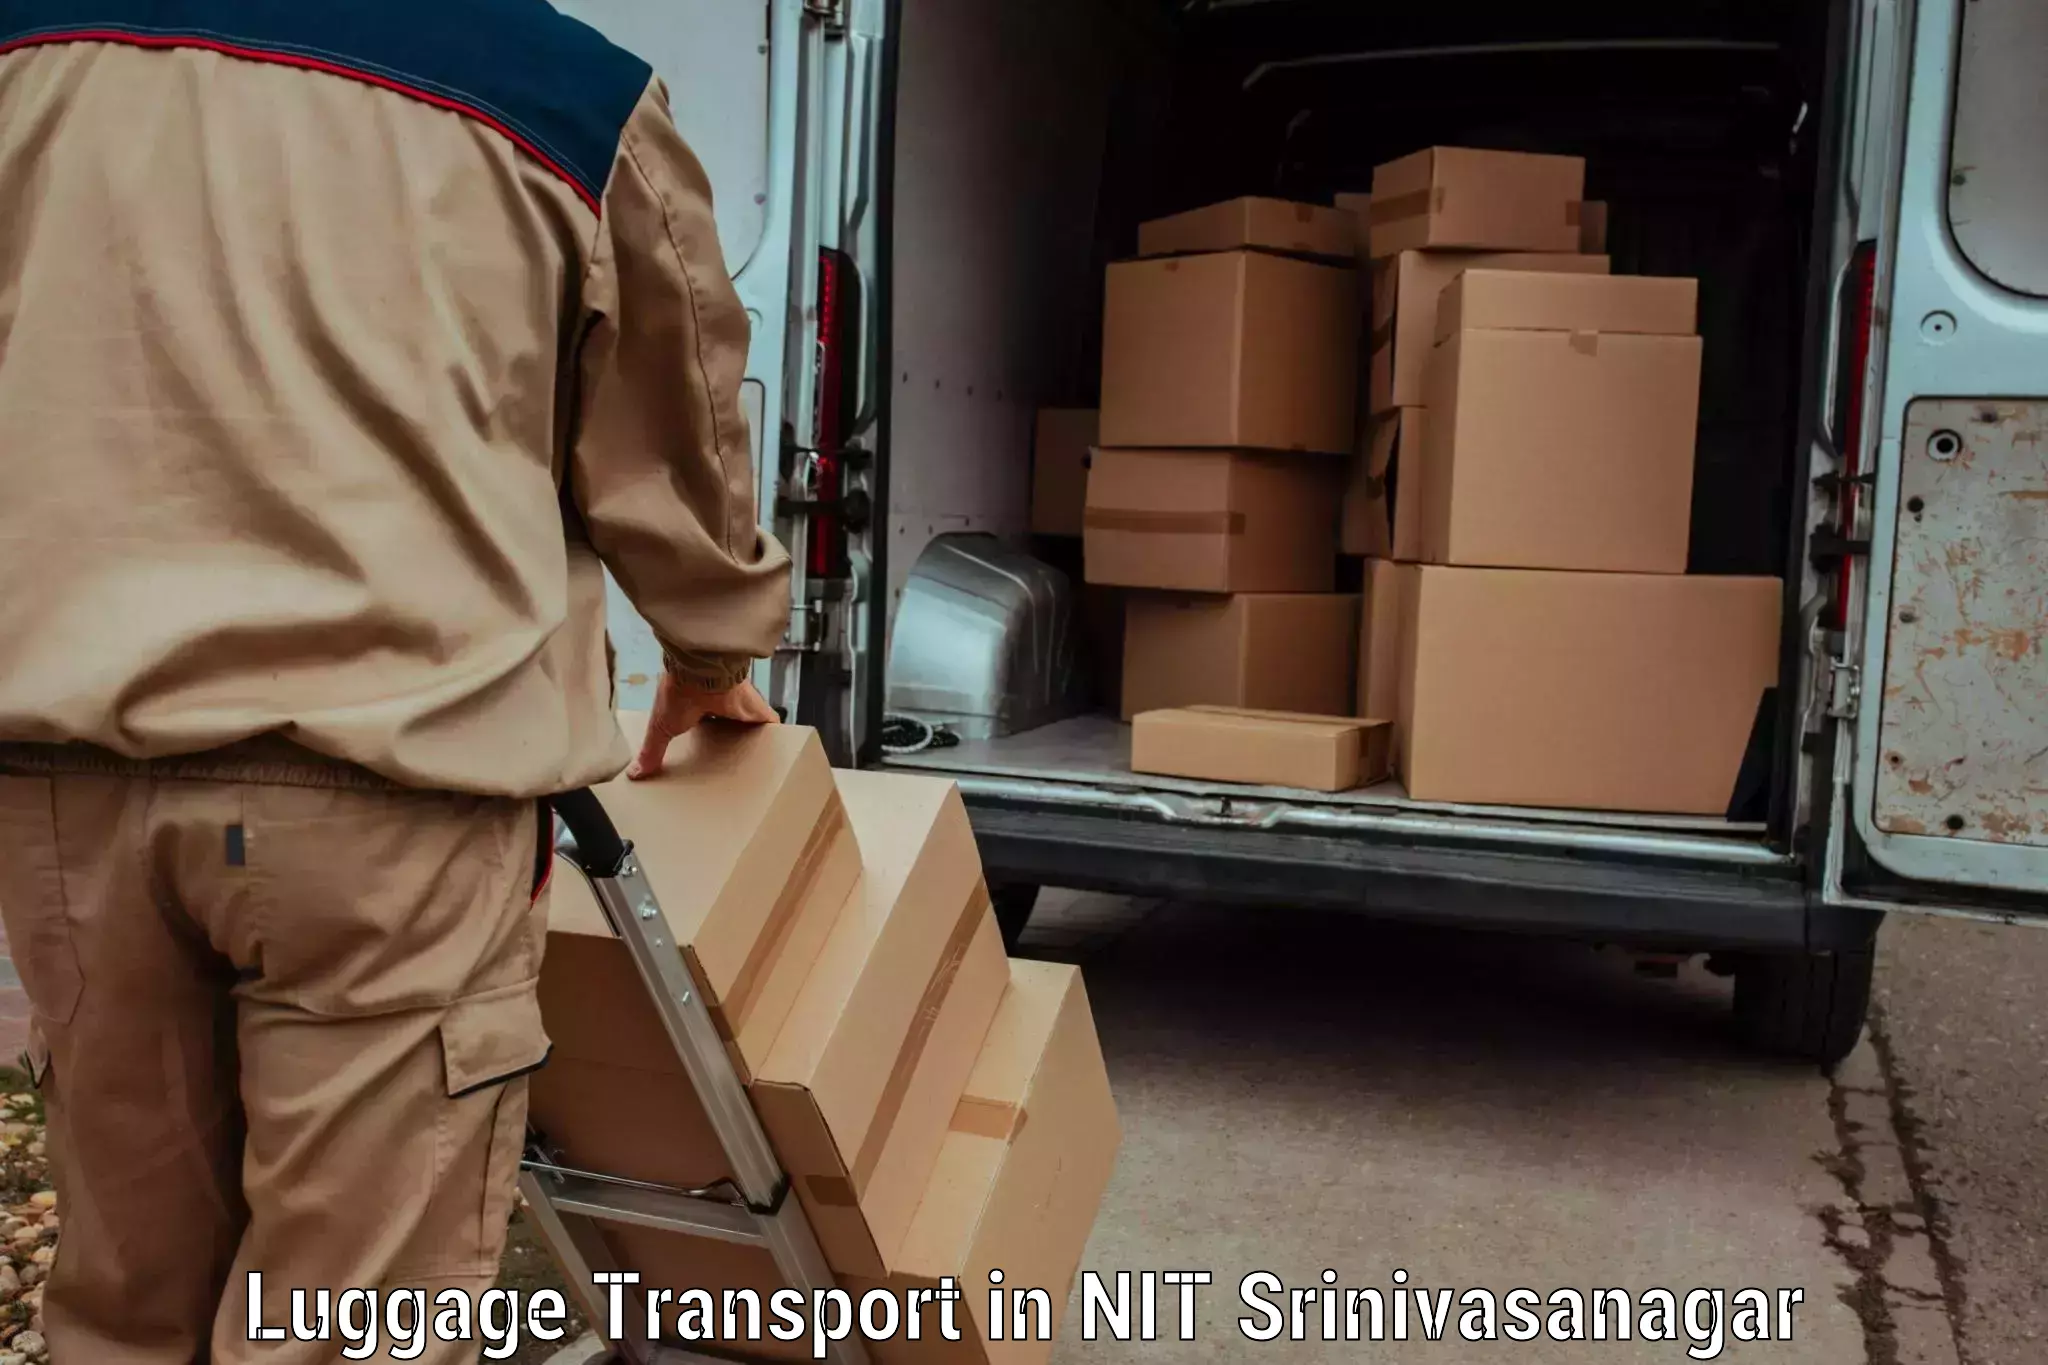 Express baggage shipping in NIT Srinivasanagar